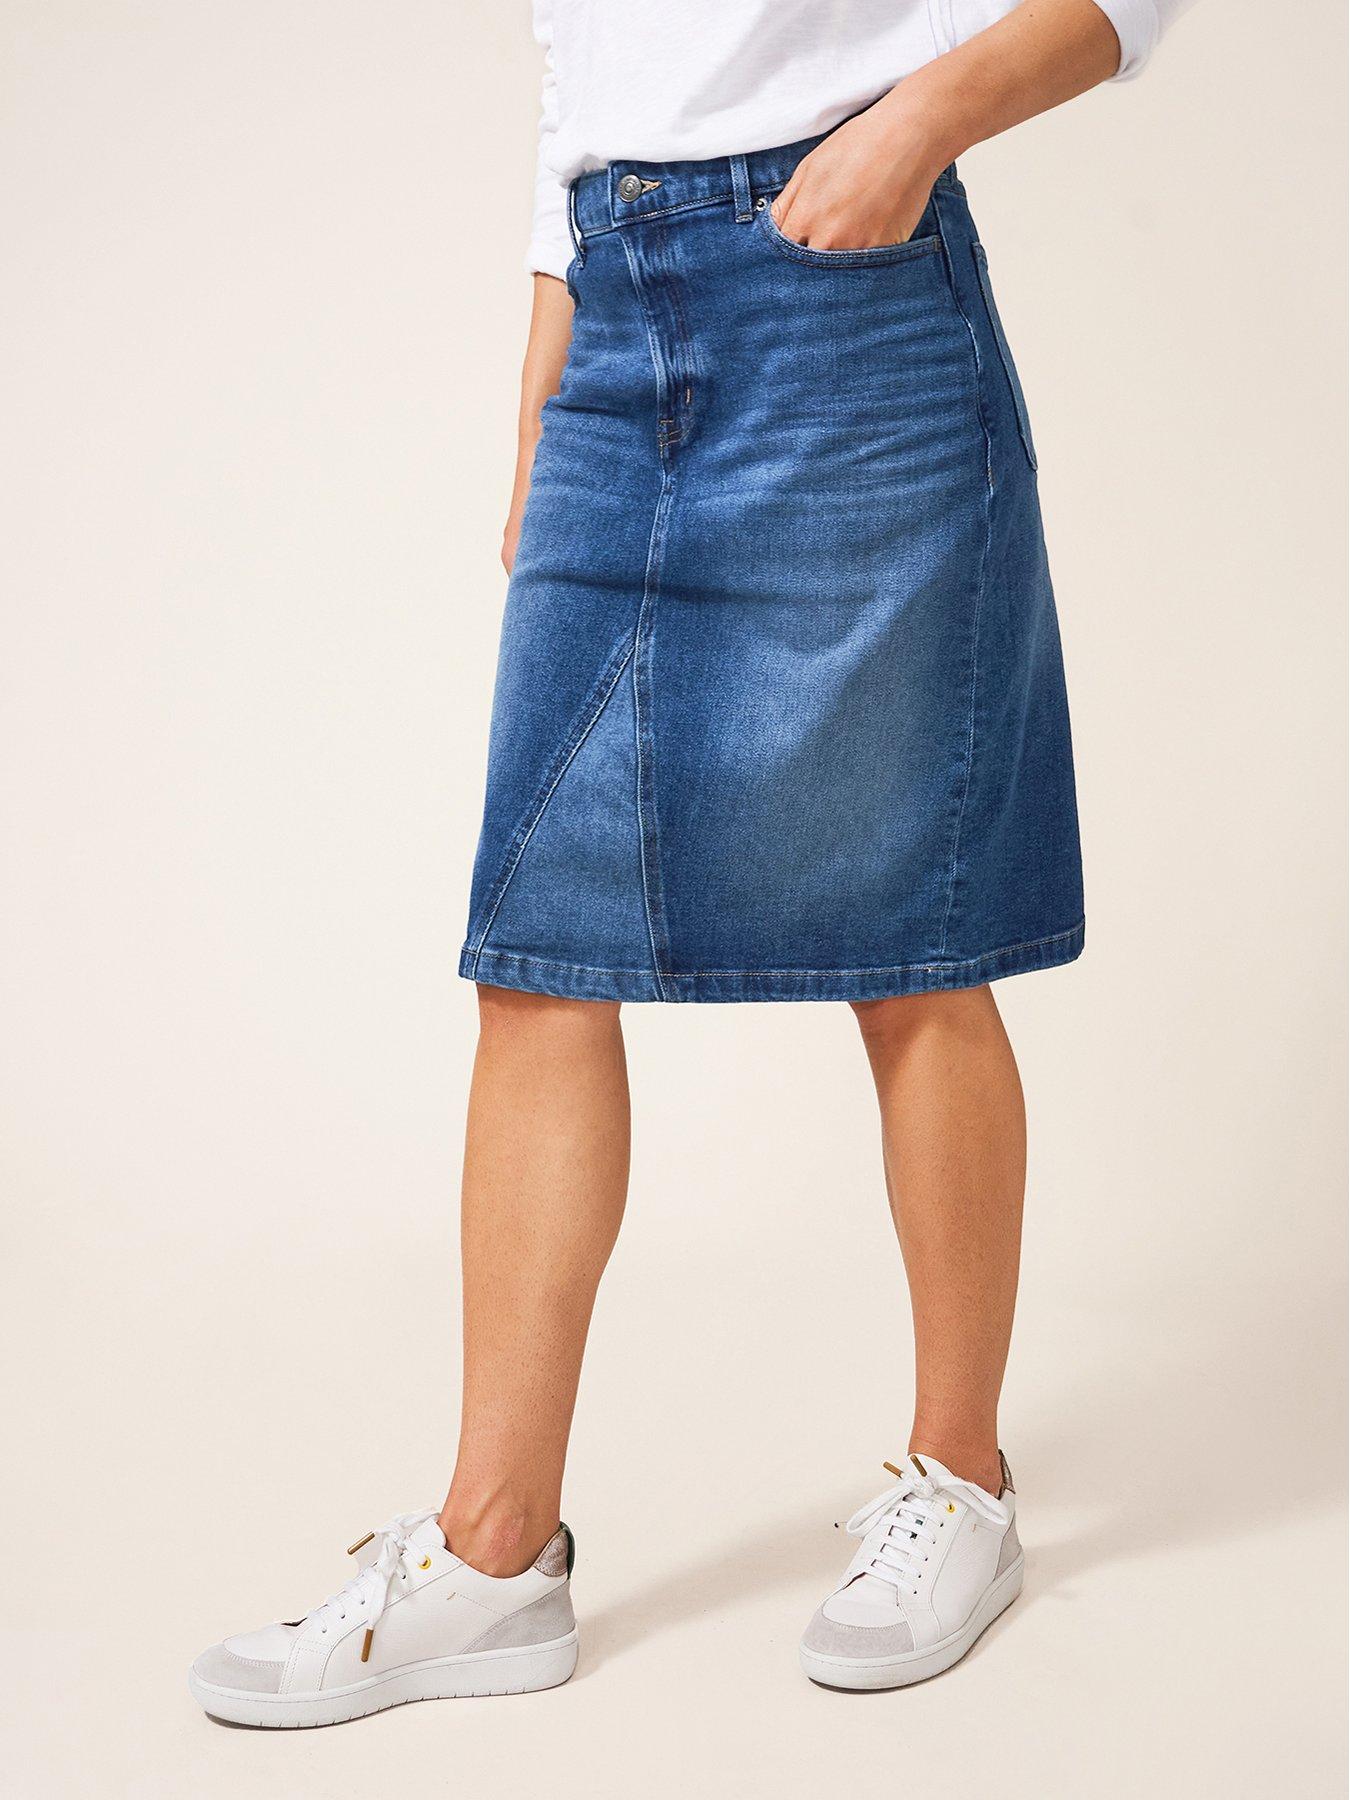 Womens High Waist Denim Skirt Stretch Pencil skirts Knee Size 10 12 14 8 16  Blue | eBay